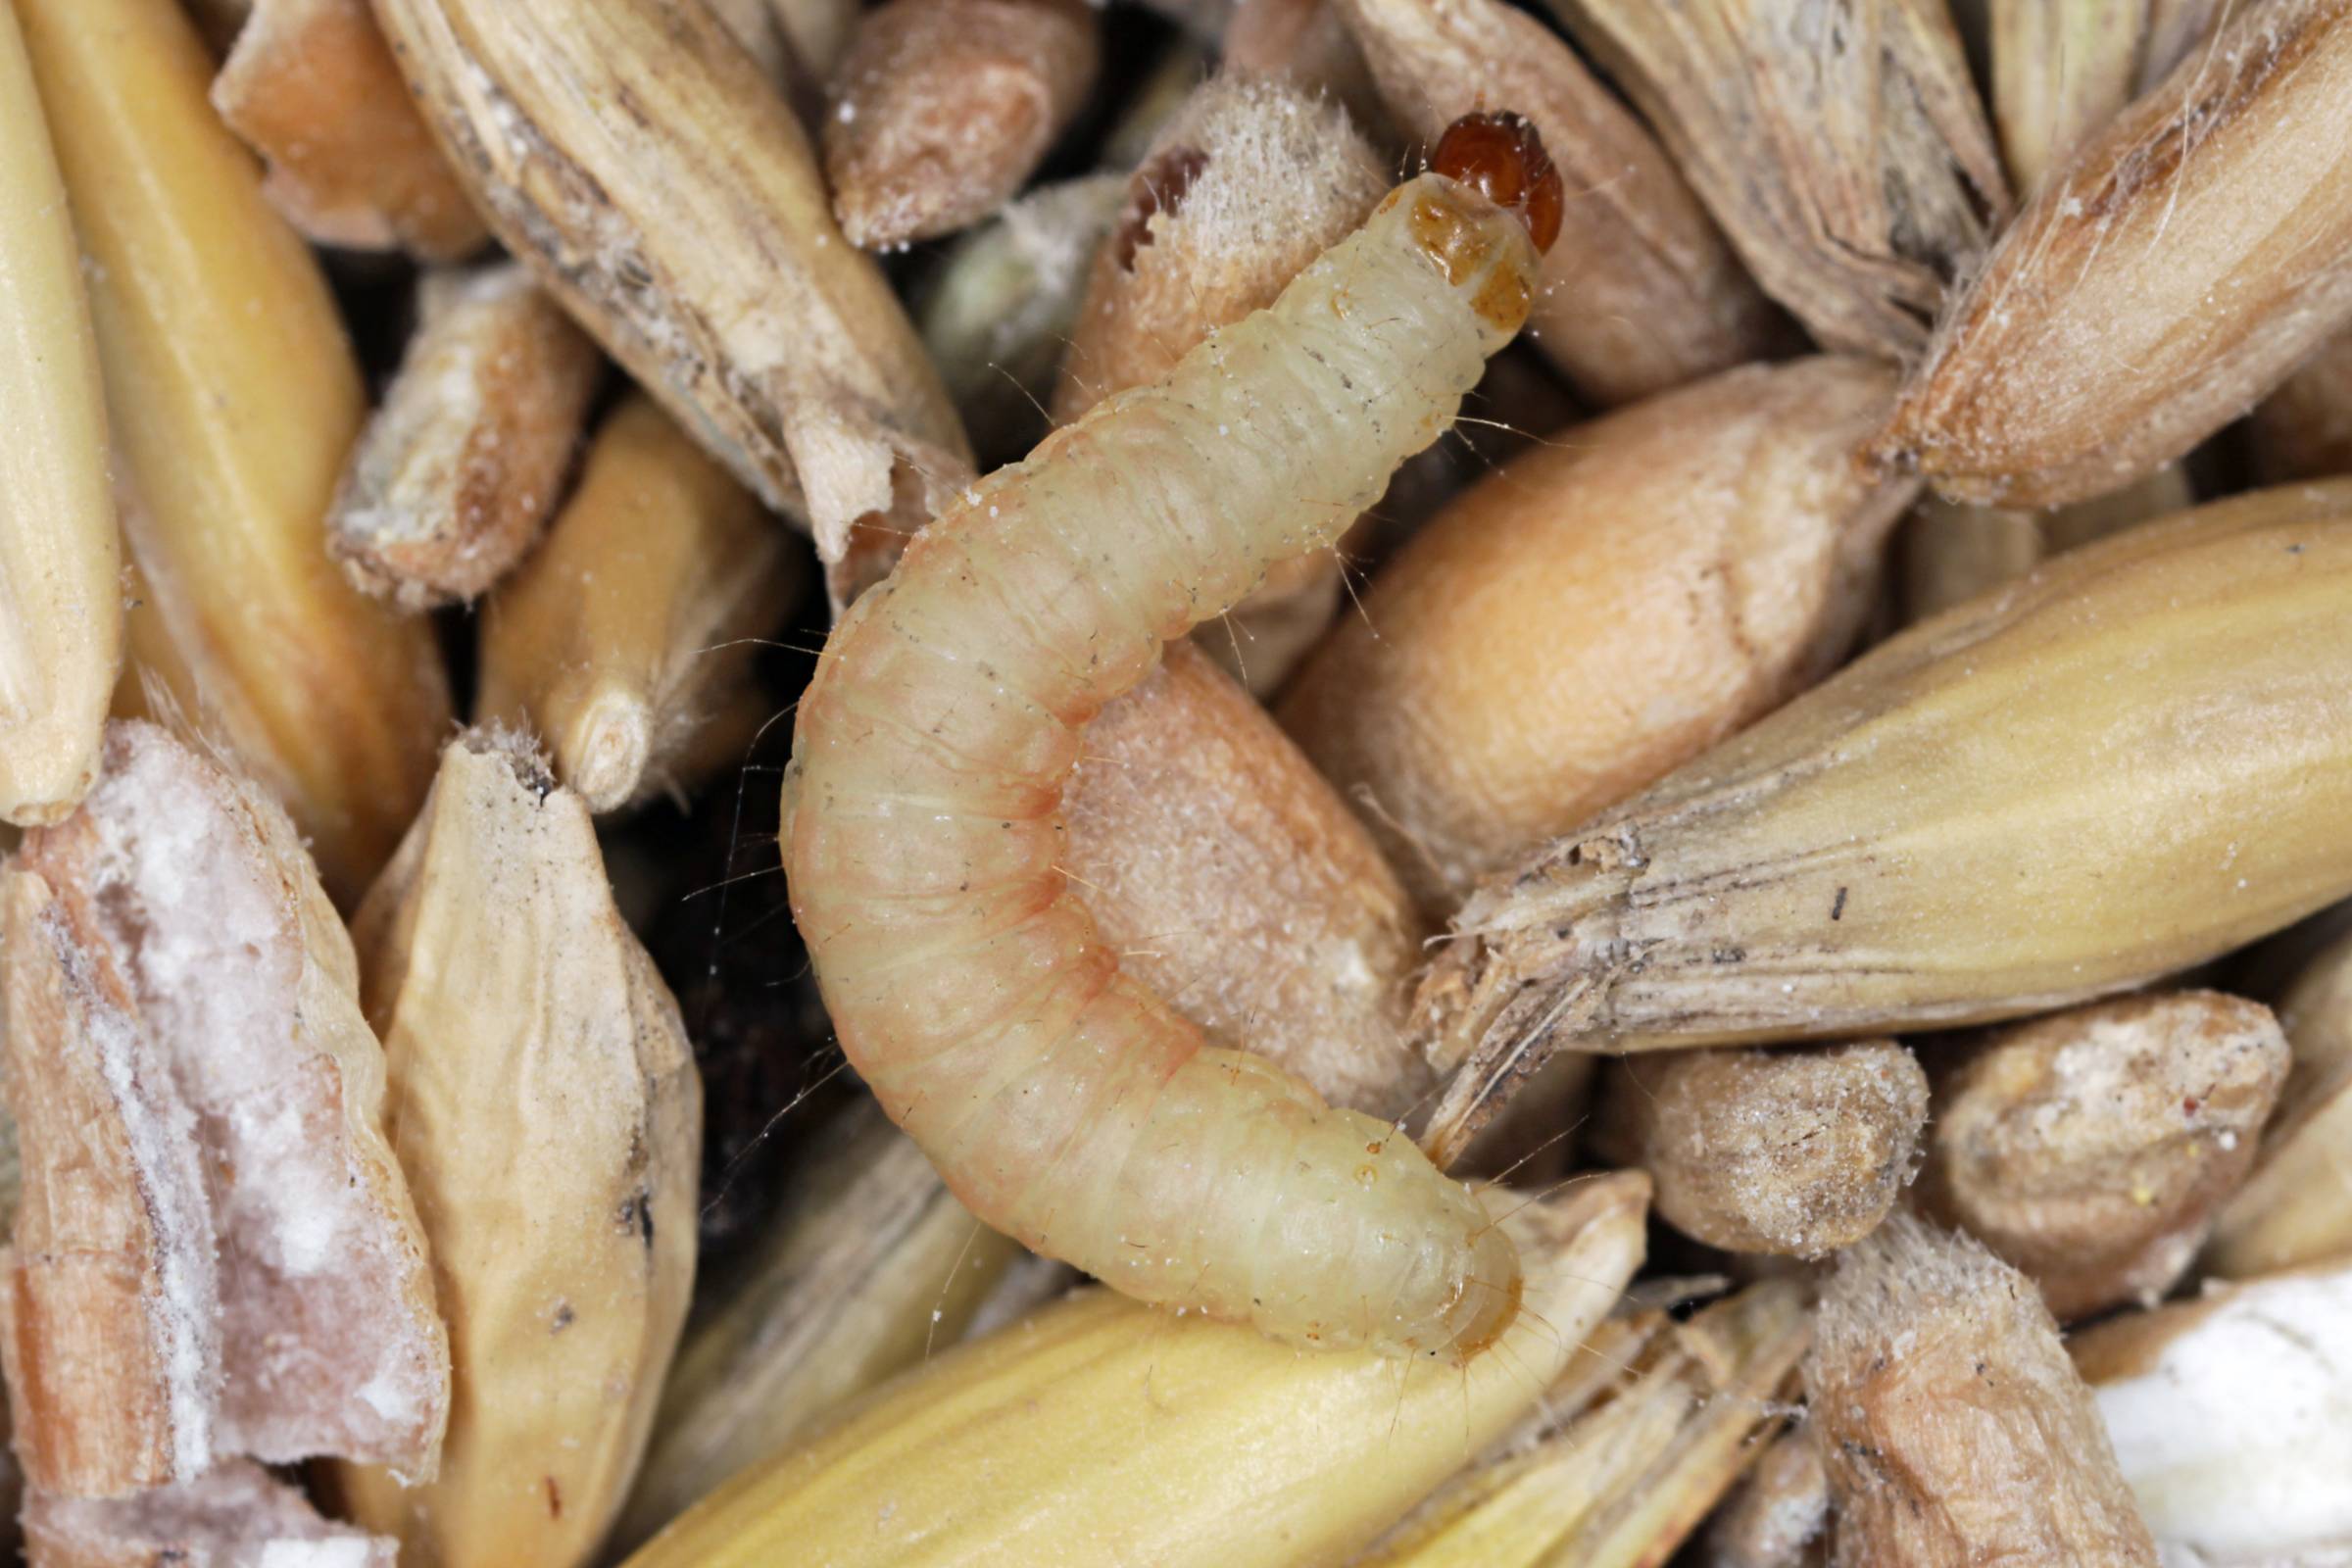 How To: Get Rid of Pantry Moths - Aantex Pest & Termite Control